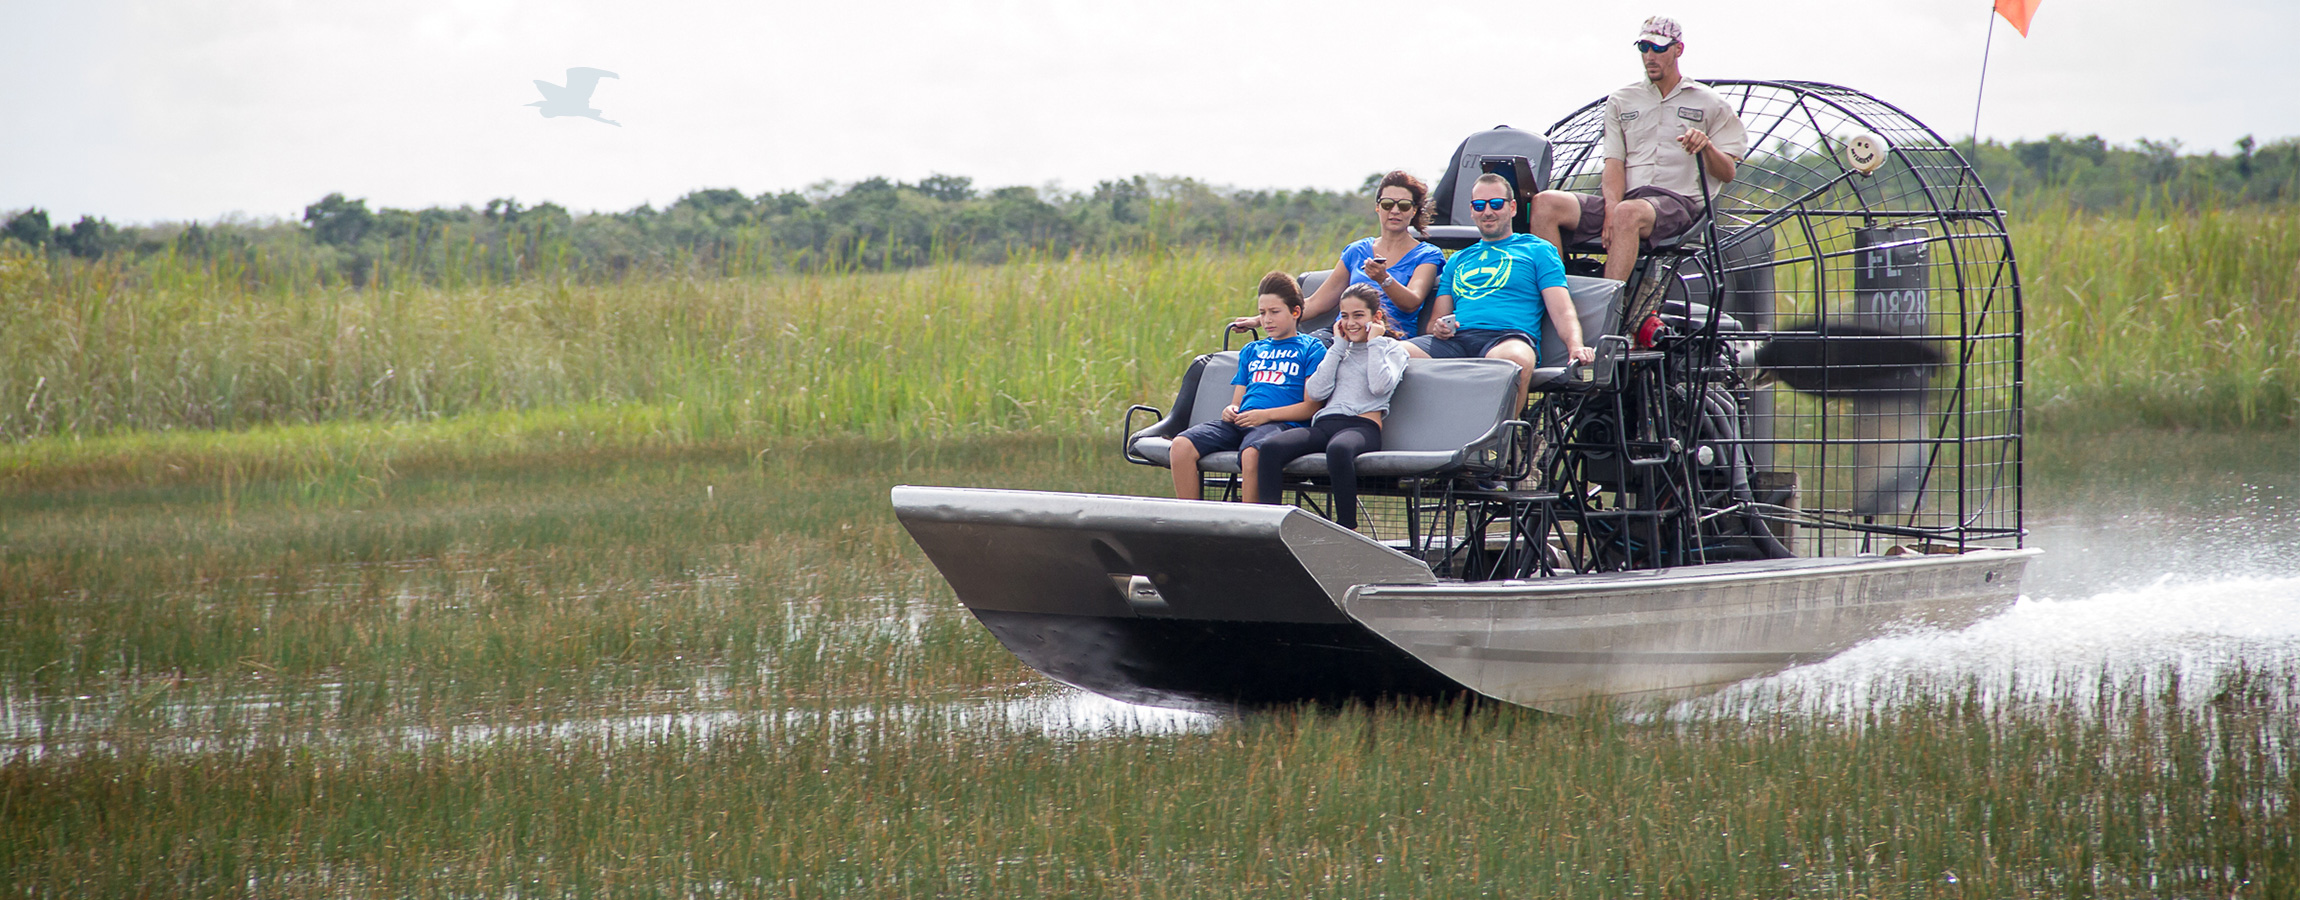 Florida Airboat Rides at Gator Park - Everglades Airboat Tours ...